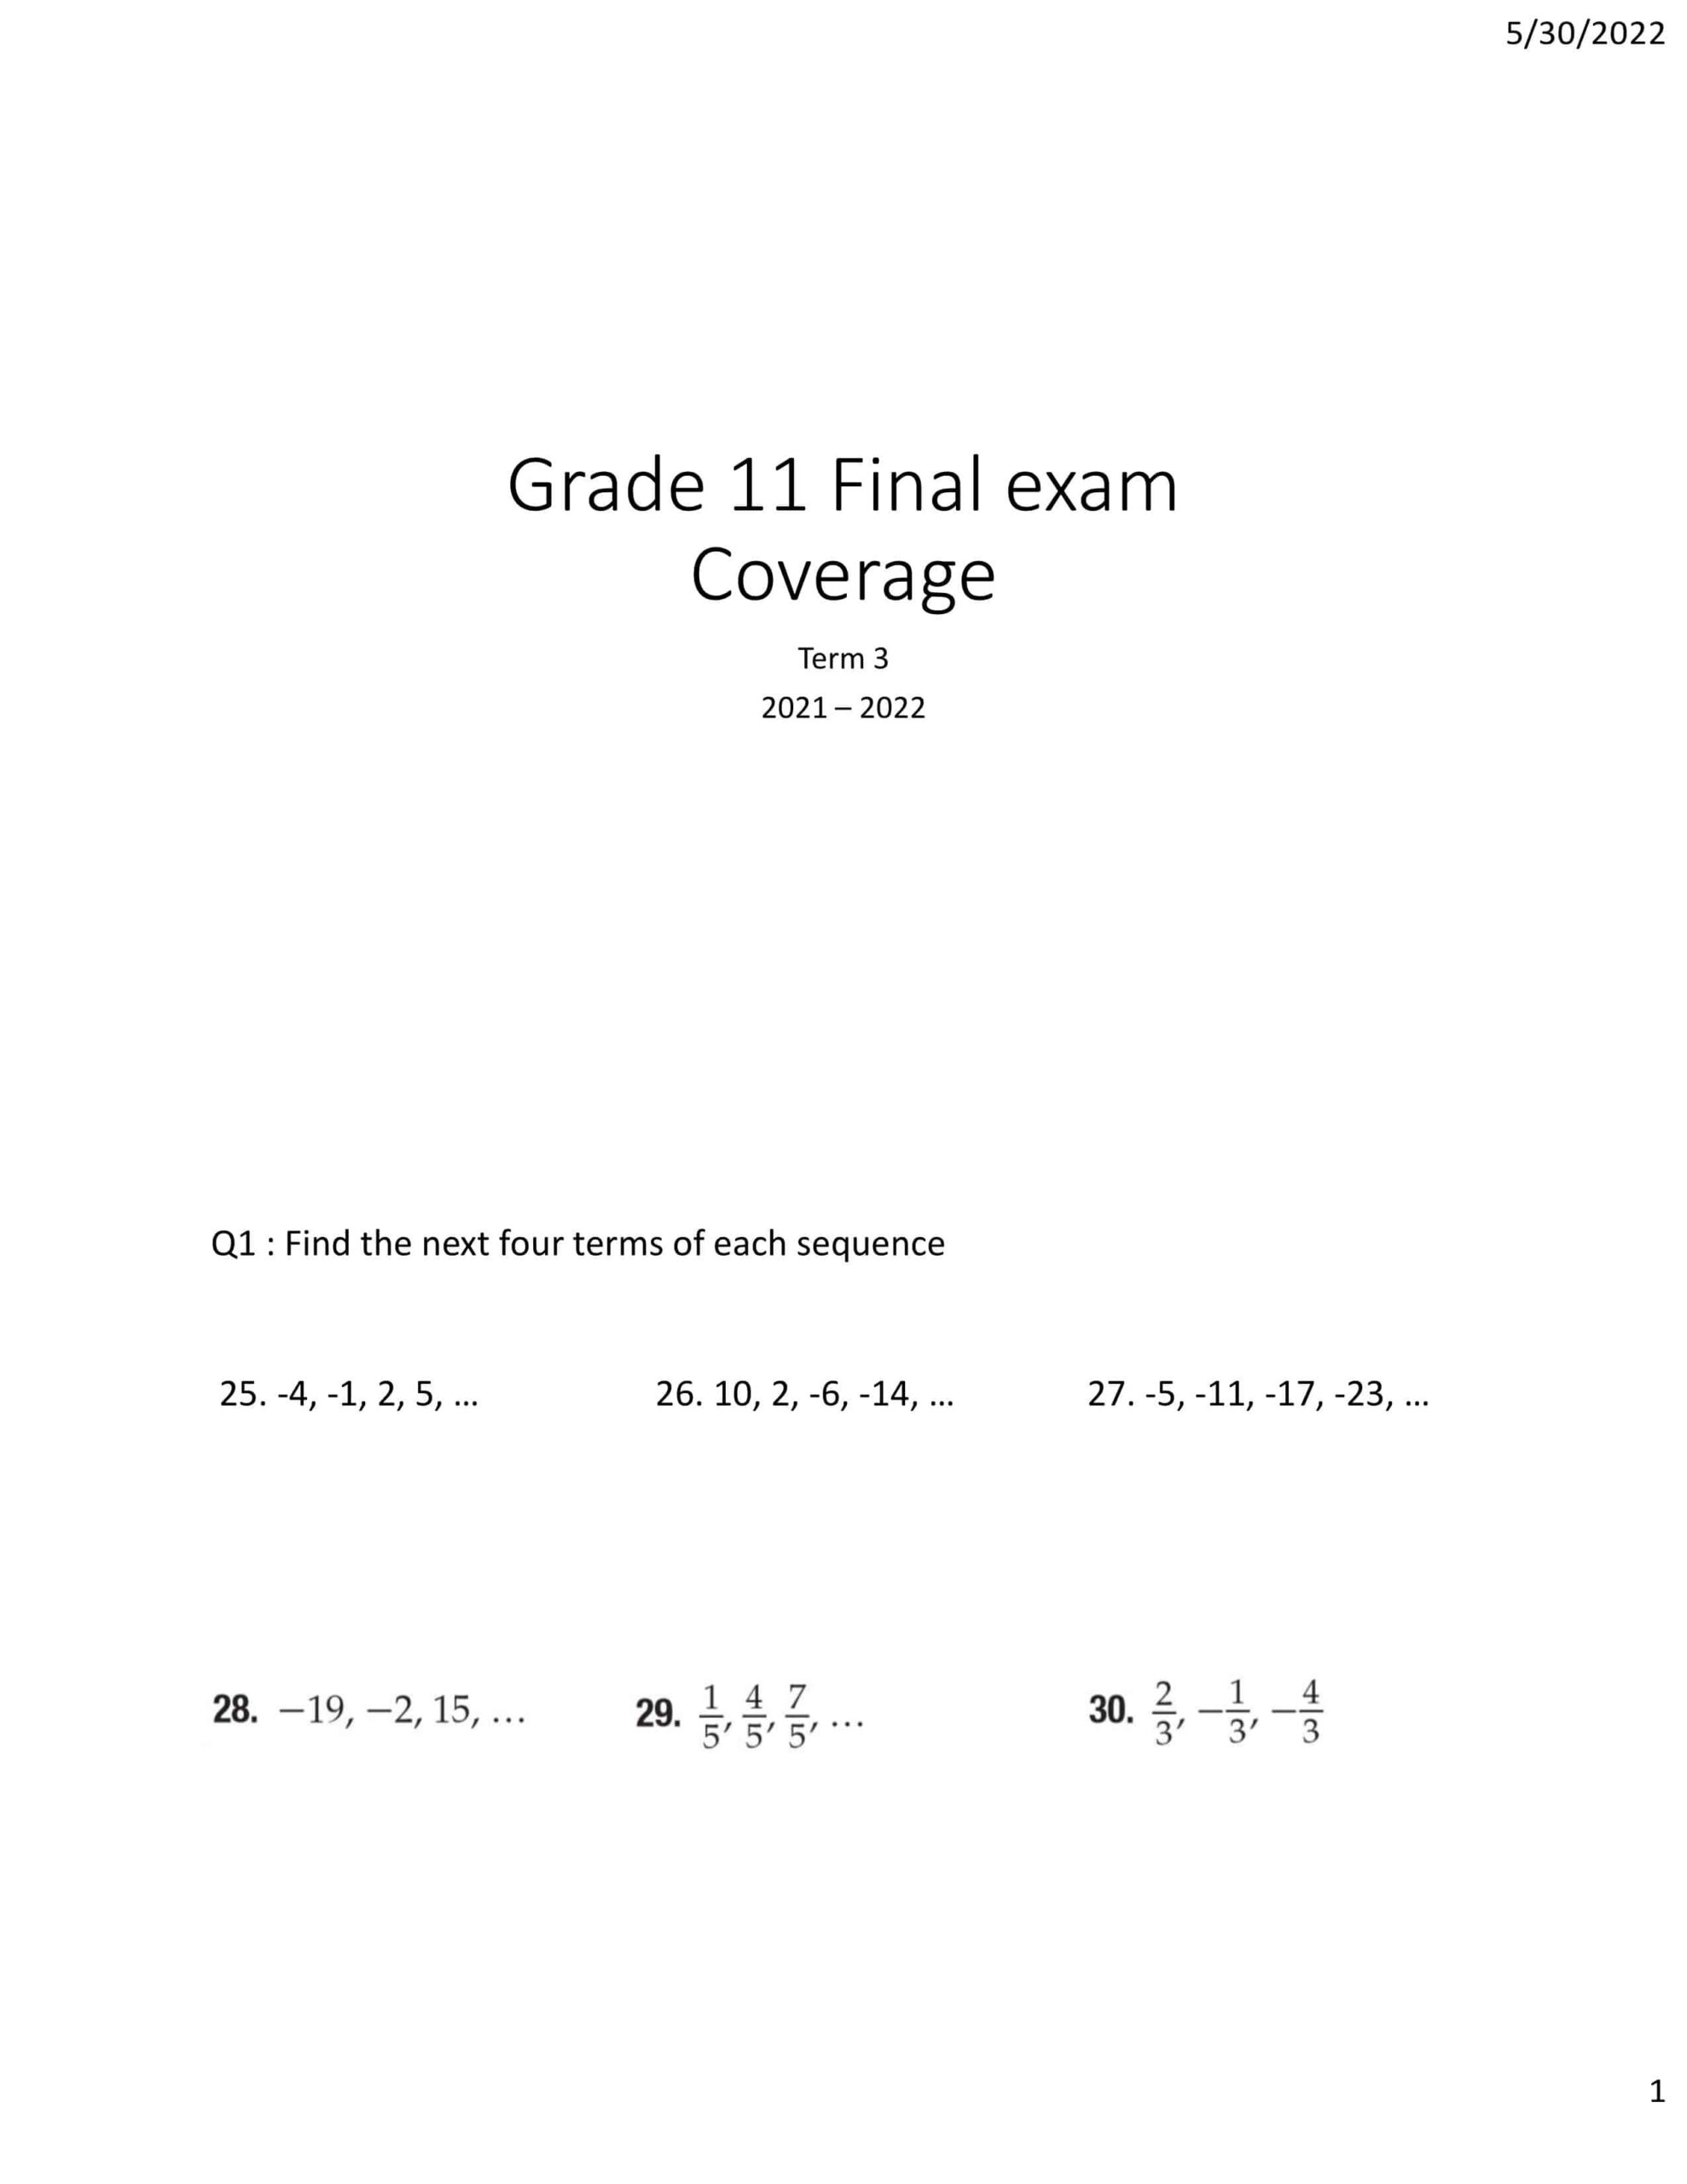 Final exam Coverage الرياضيات المتكاملة الصف الحادي عشر 